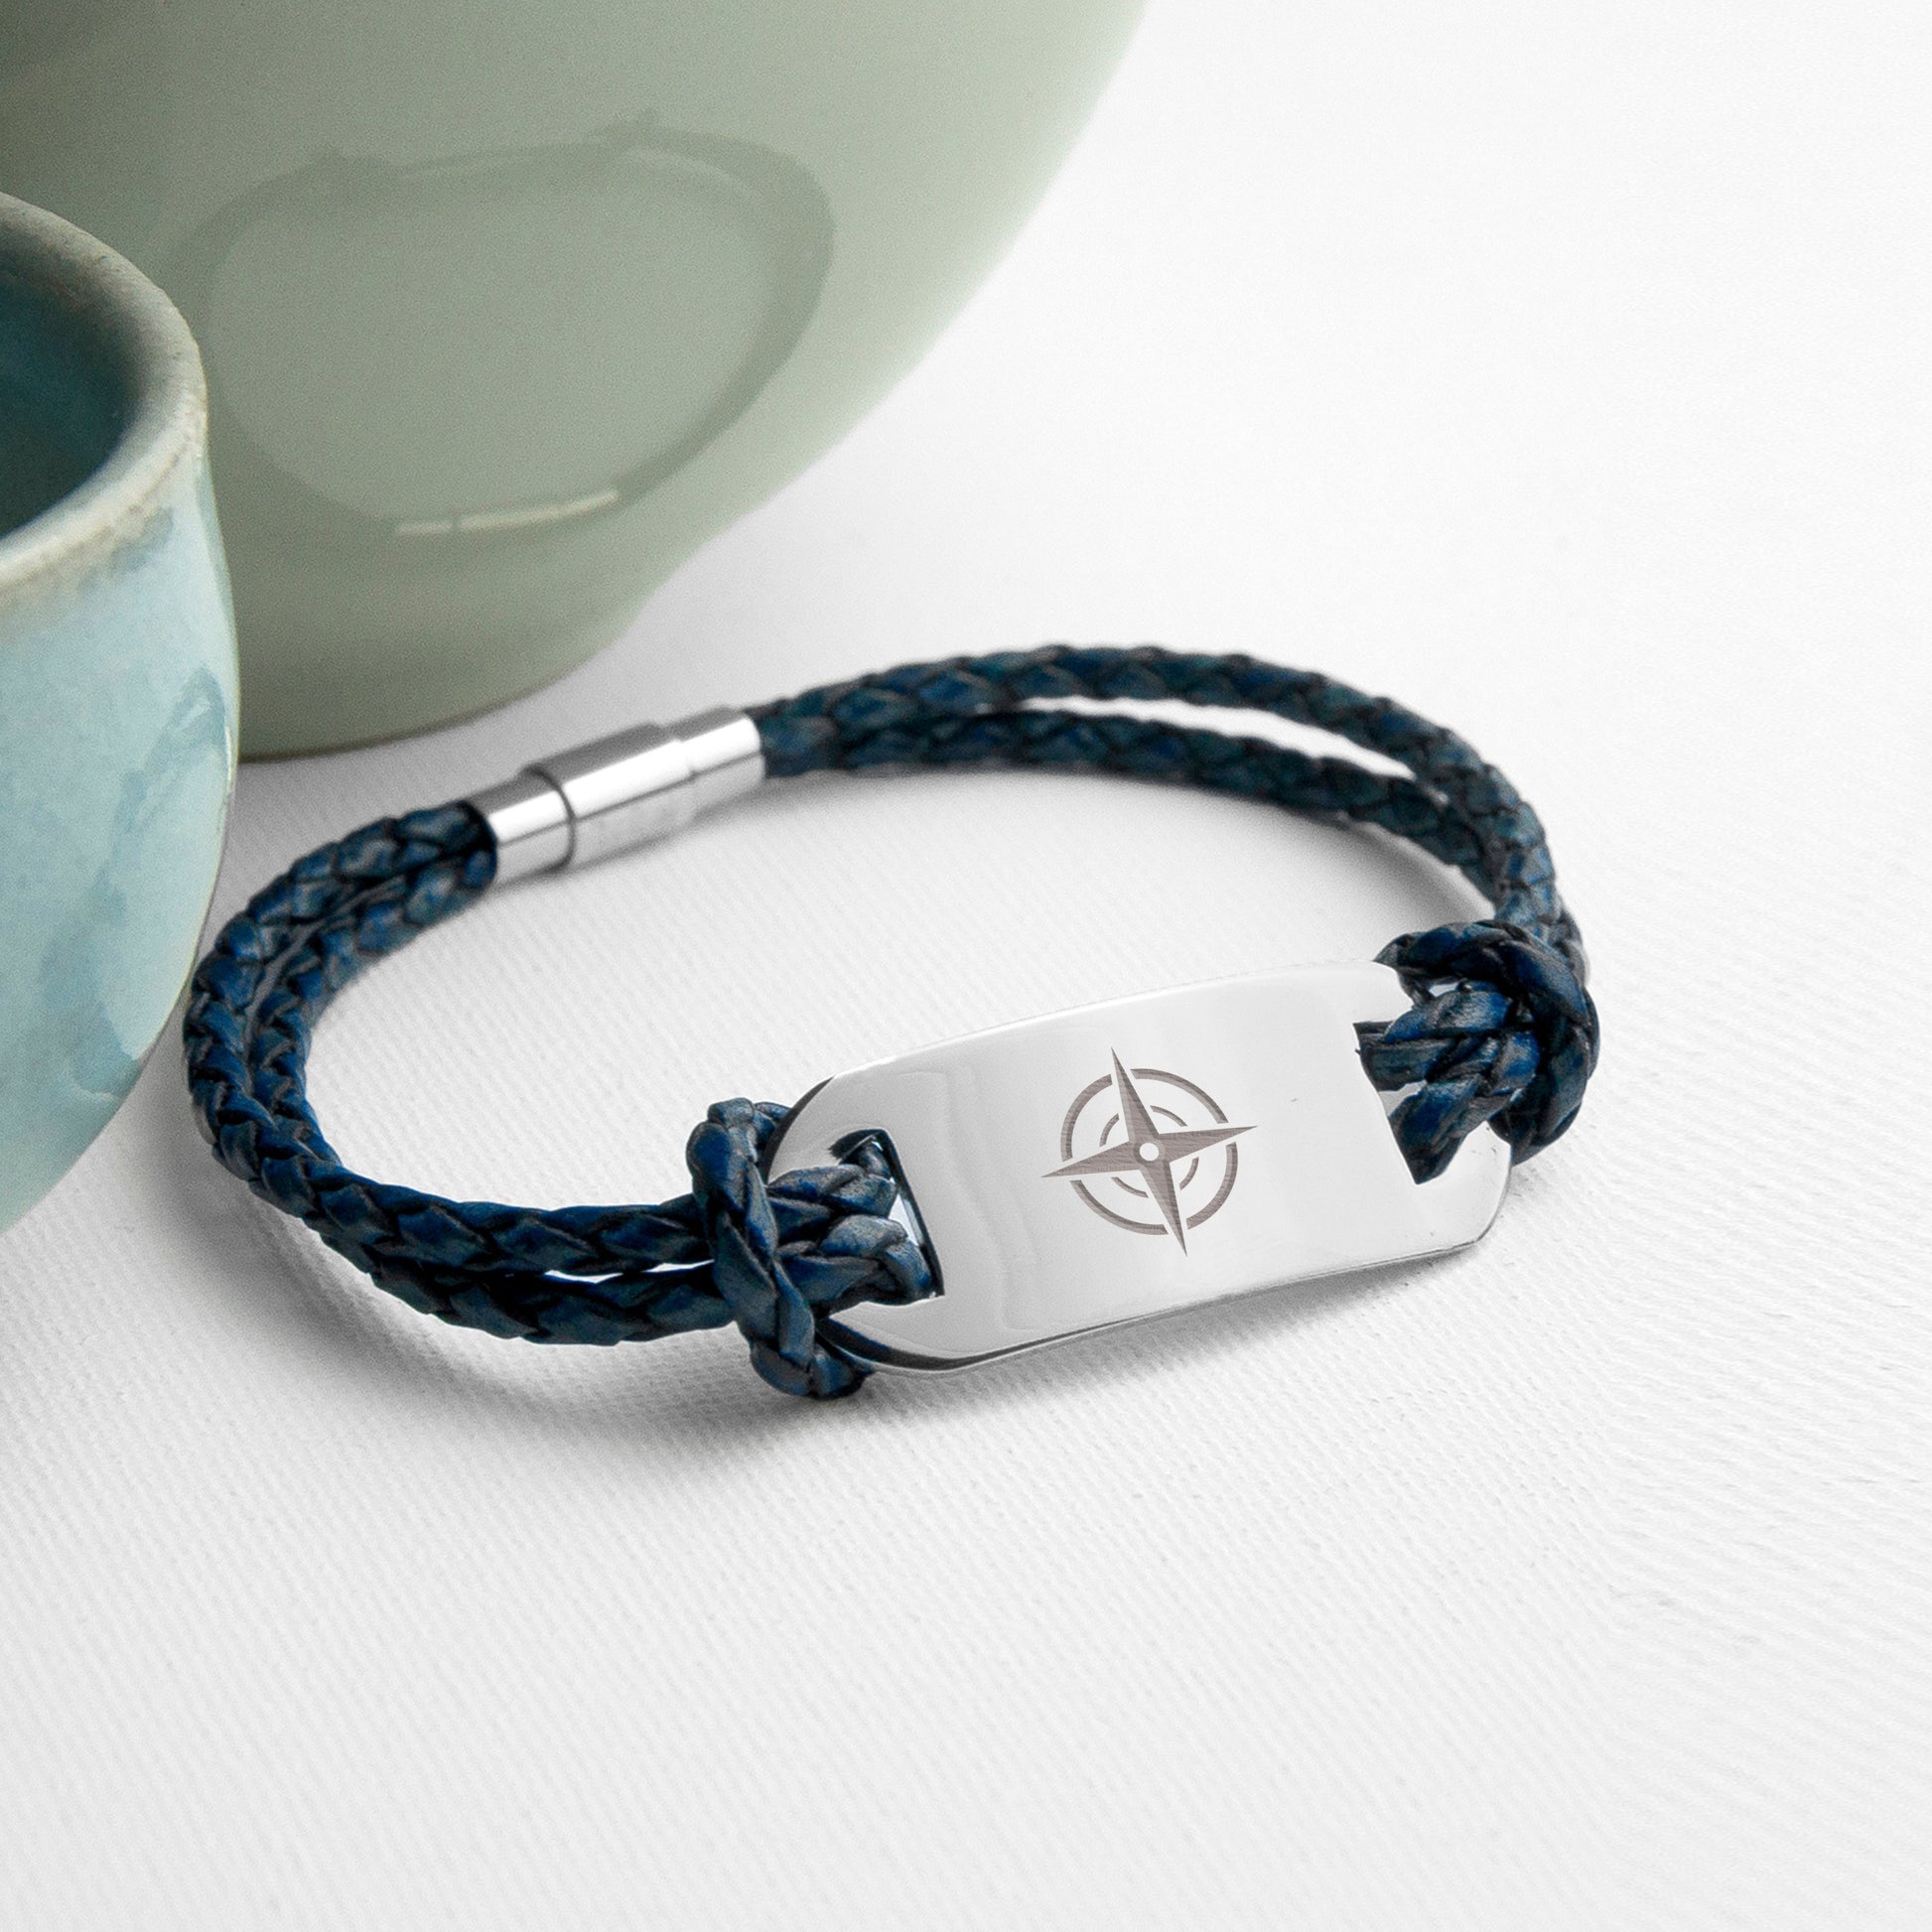 Personalized Men's Bracelets - Personalized Men's Travel Compass Statement Leather Bracelet 